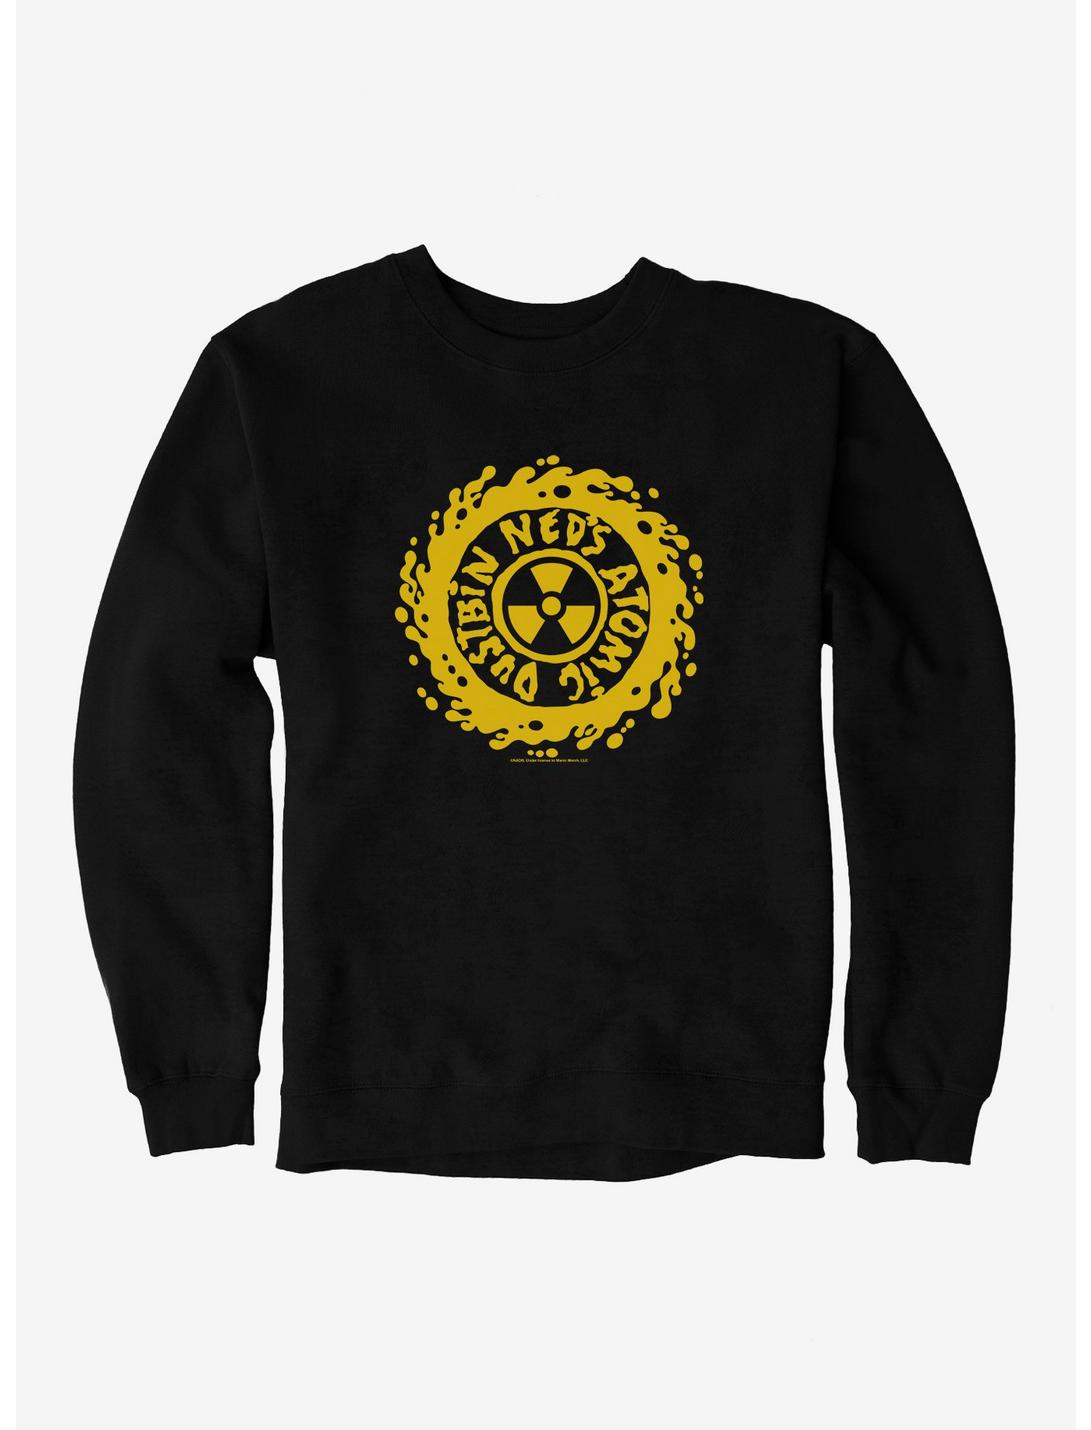 Ned's Atomic Dustbin Biohazard Logo Sweatshirt, BLACK, hi-res